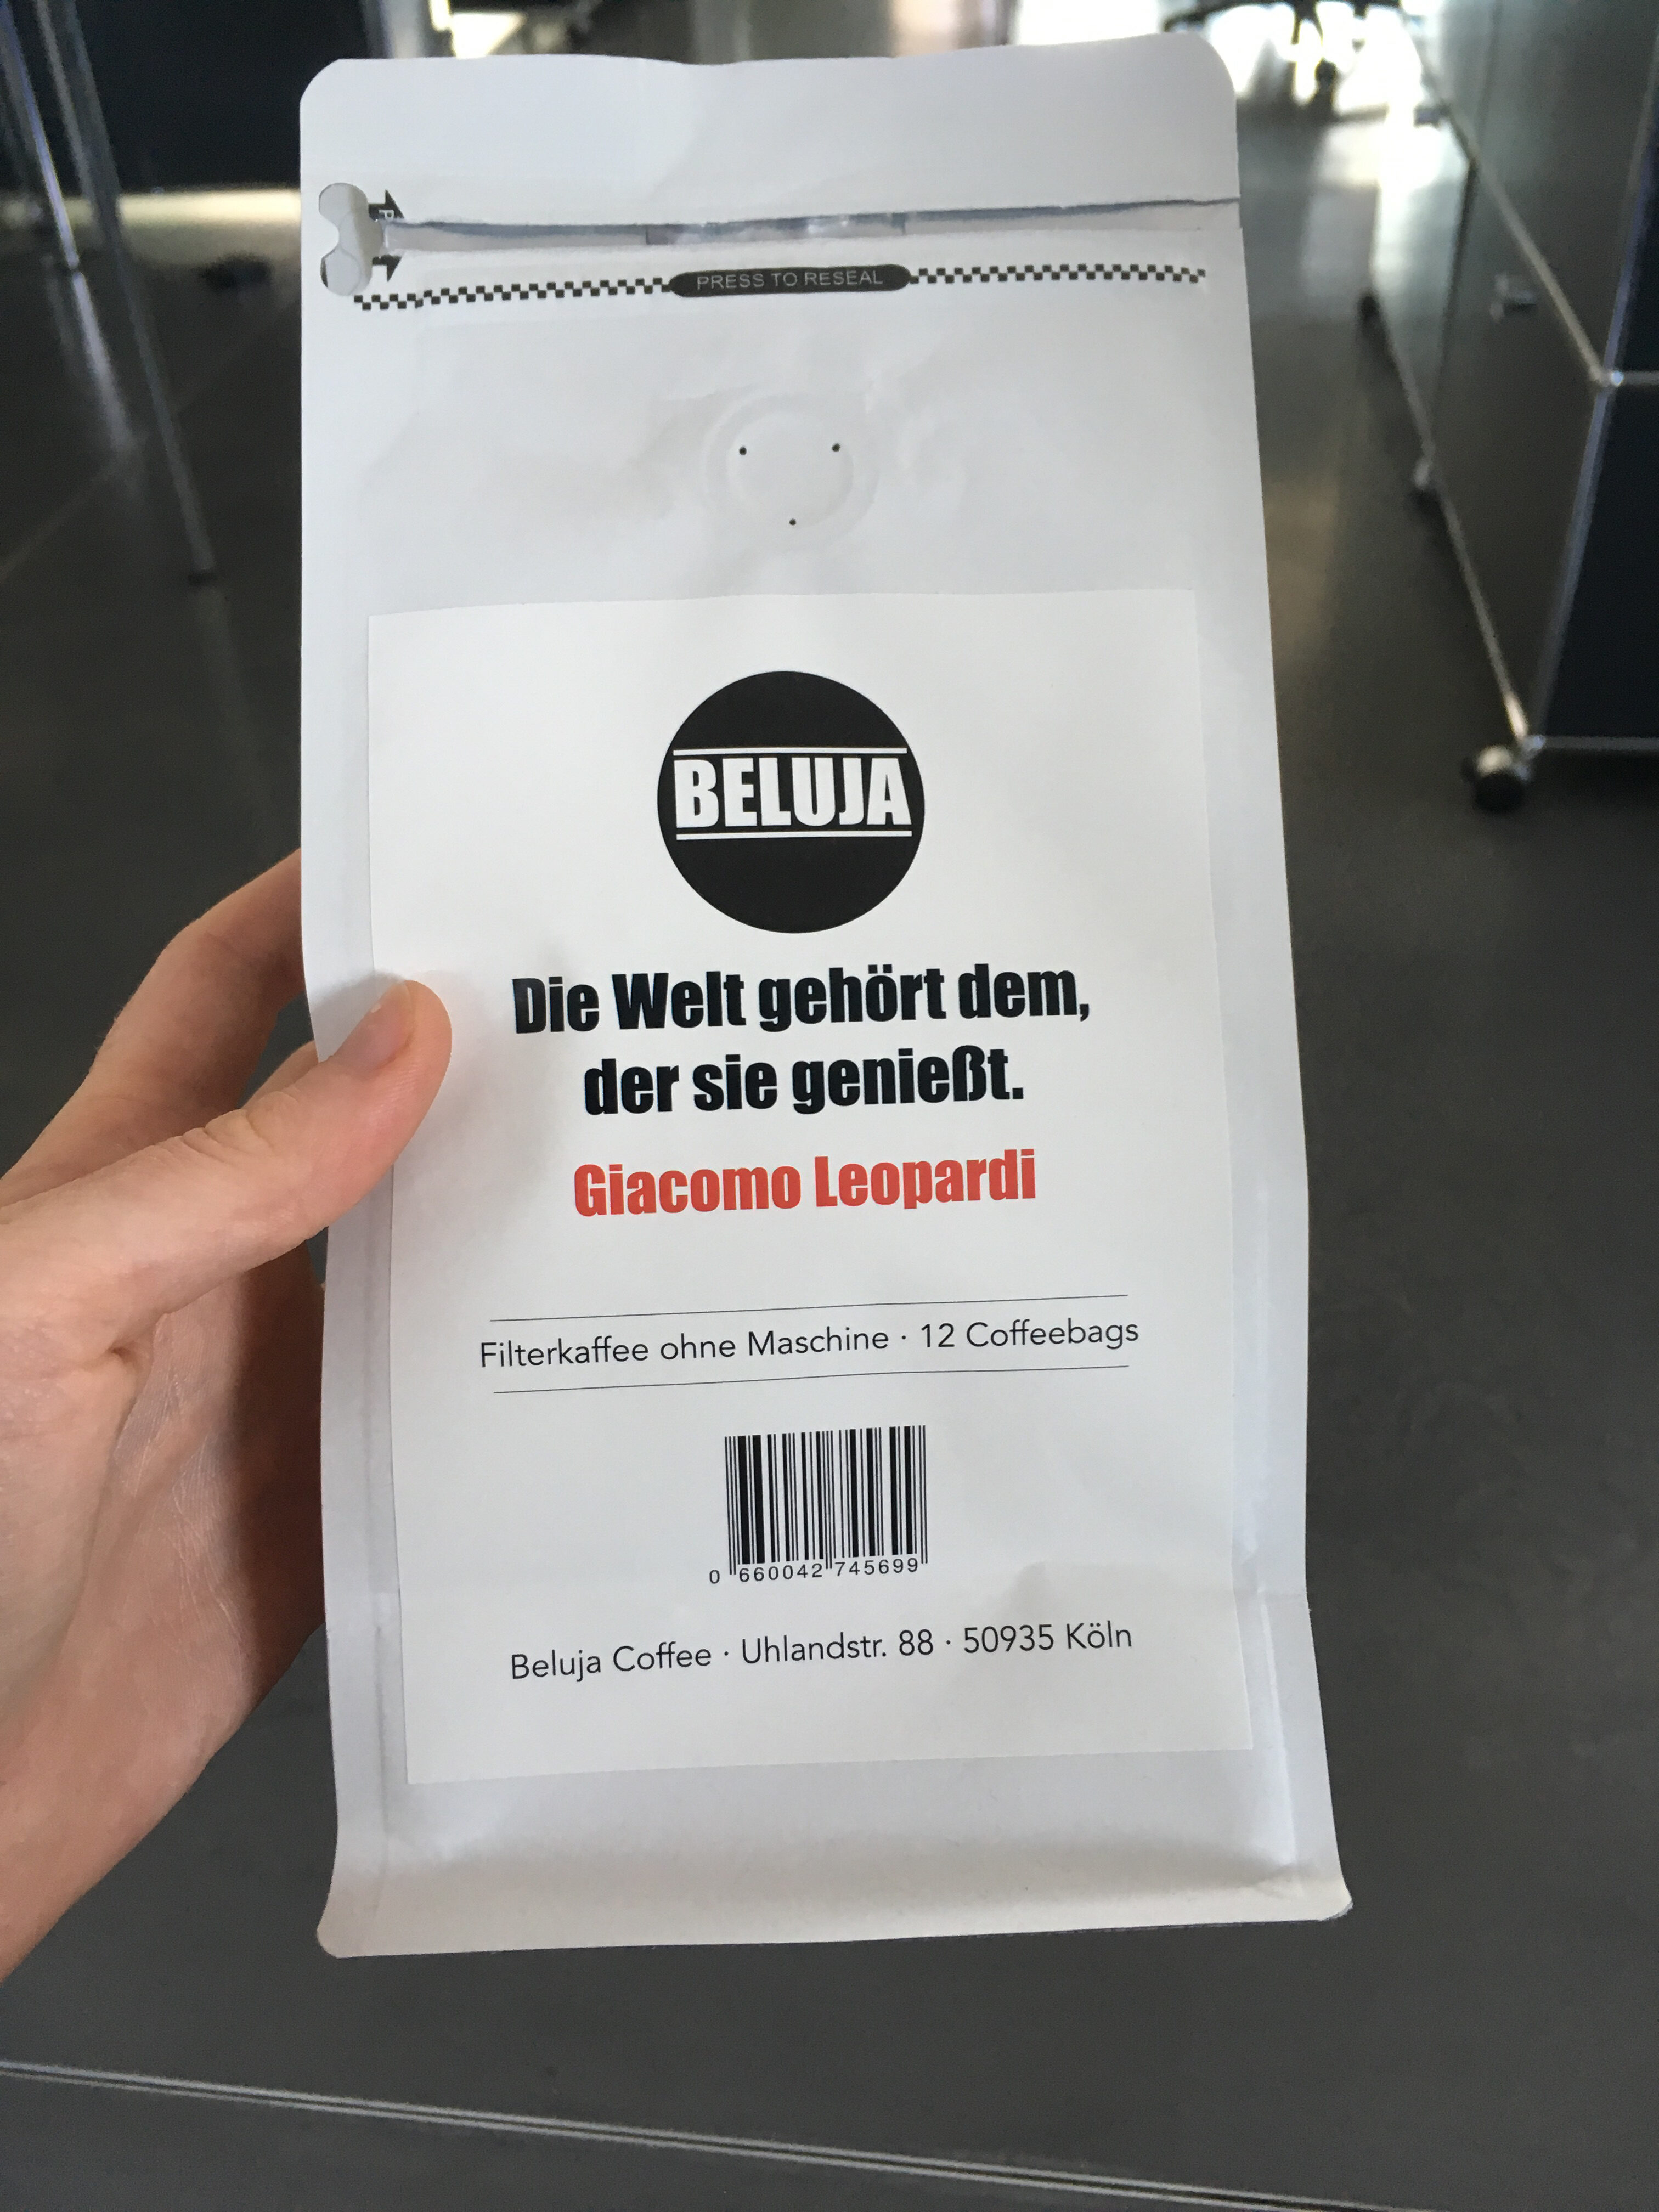 Filterkaffee ohne Maschine - 12 Coffeebags - Produkt